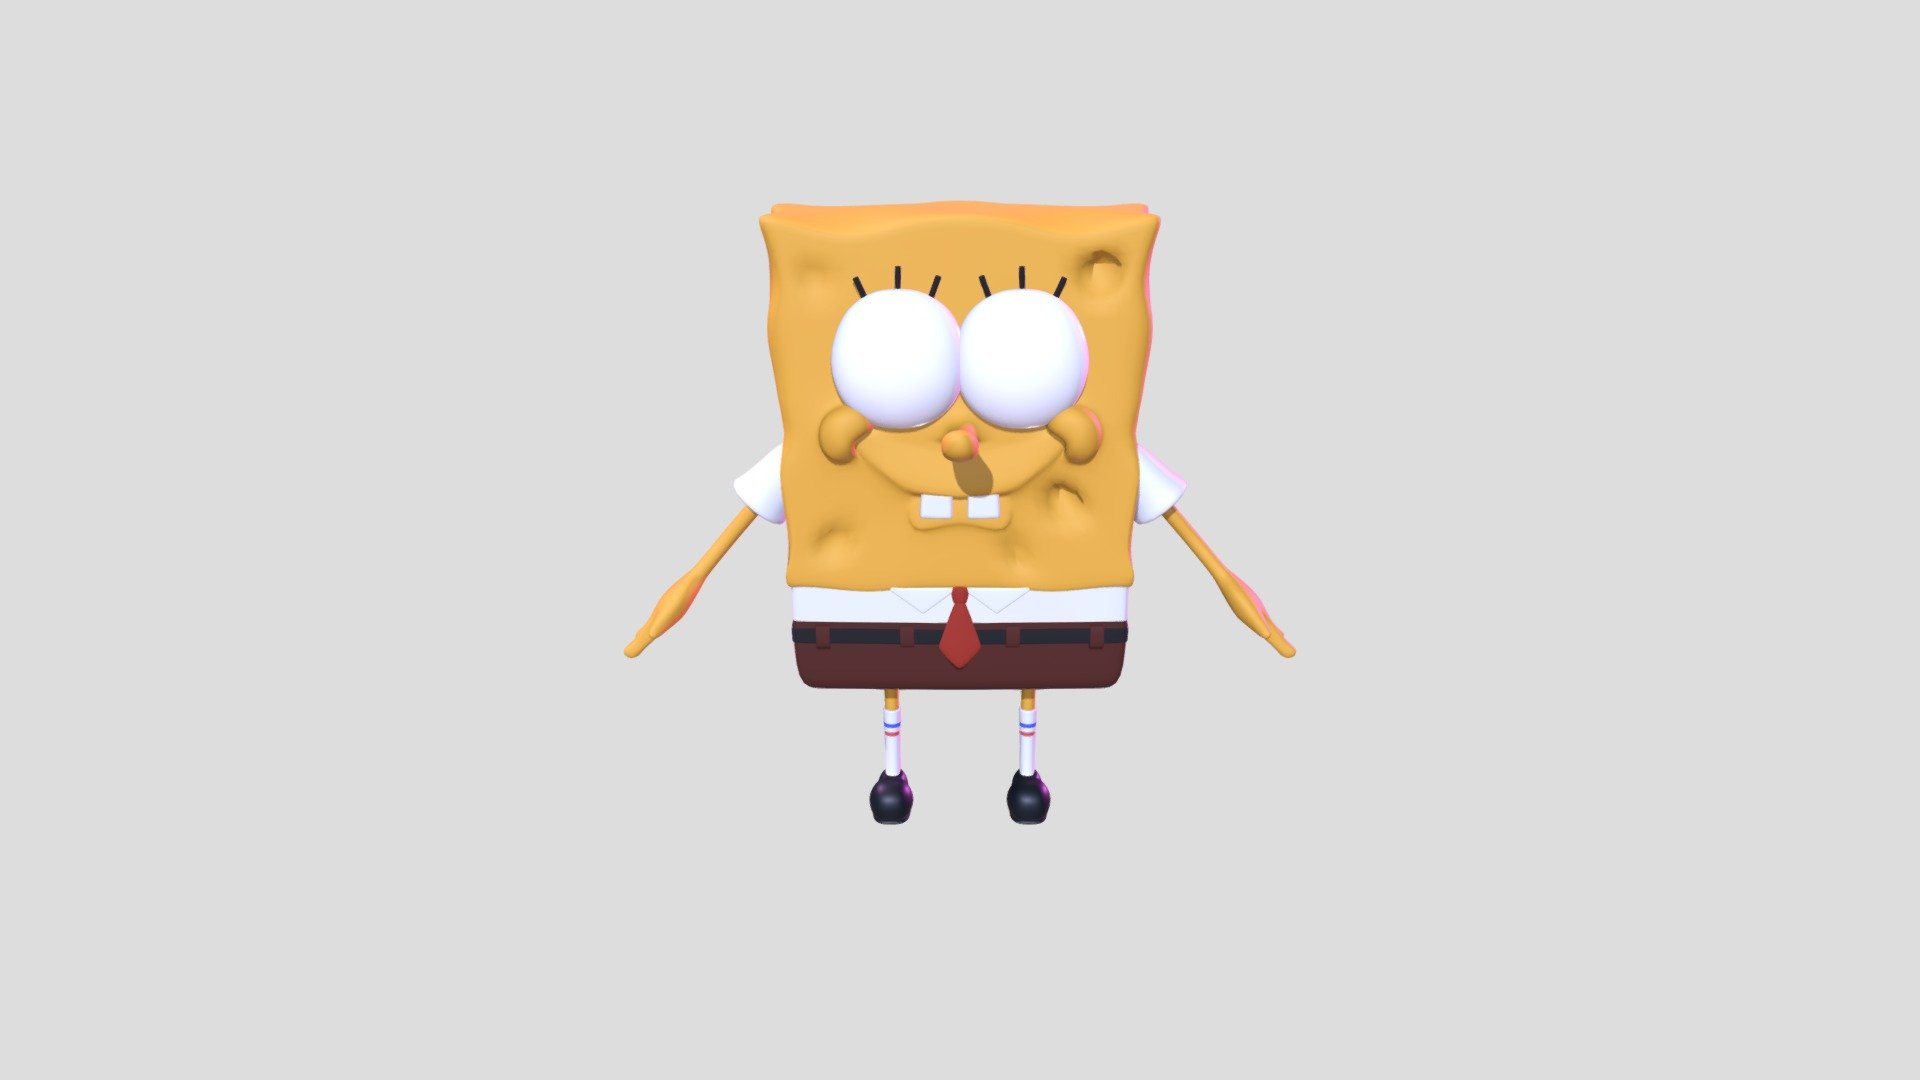 ArtStation - Spongebob Squarepants